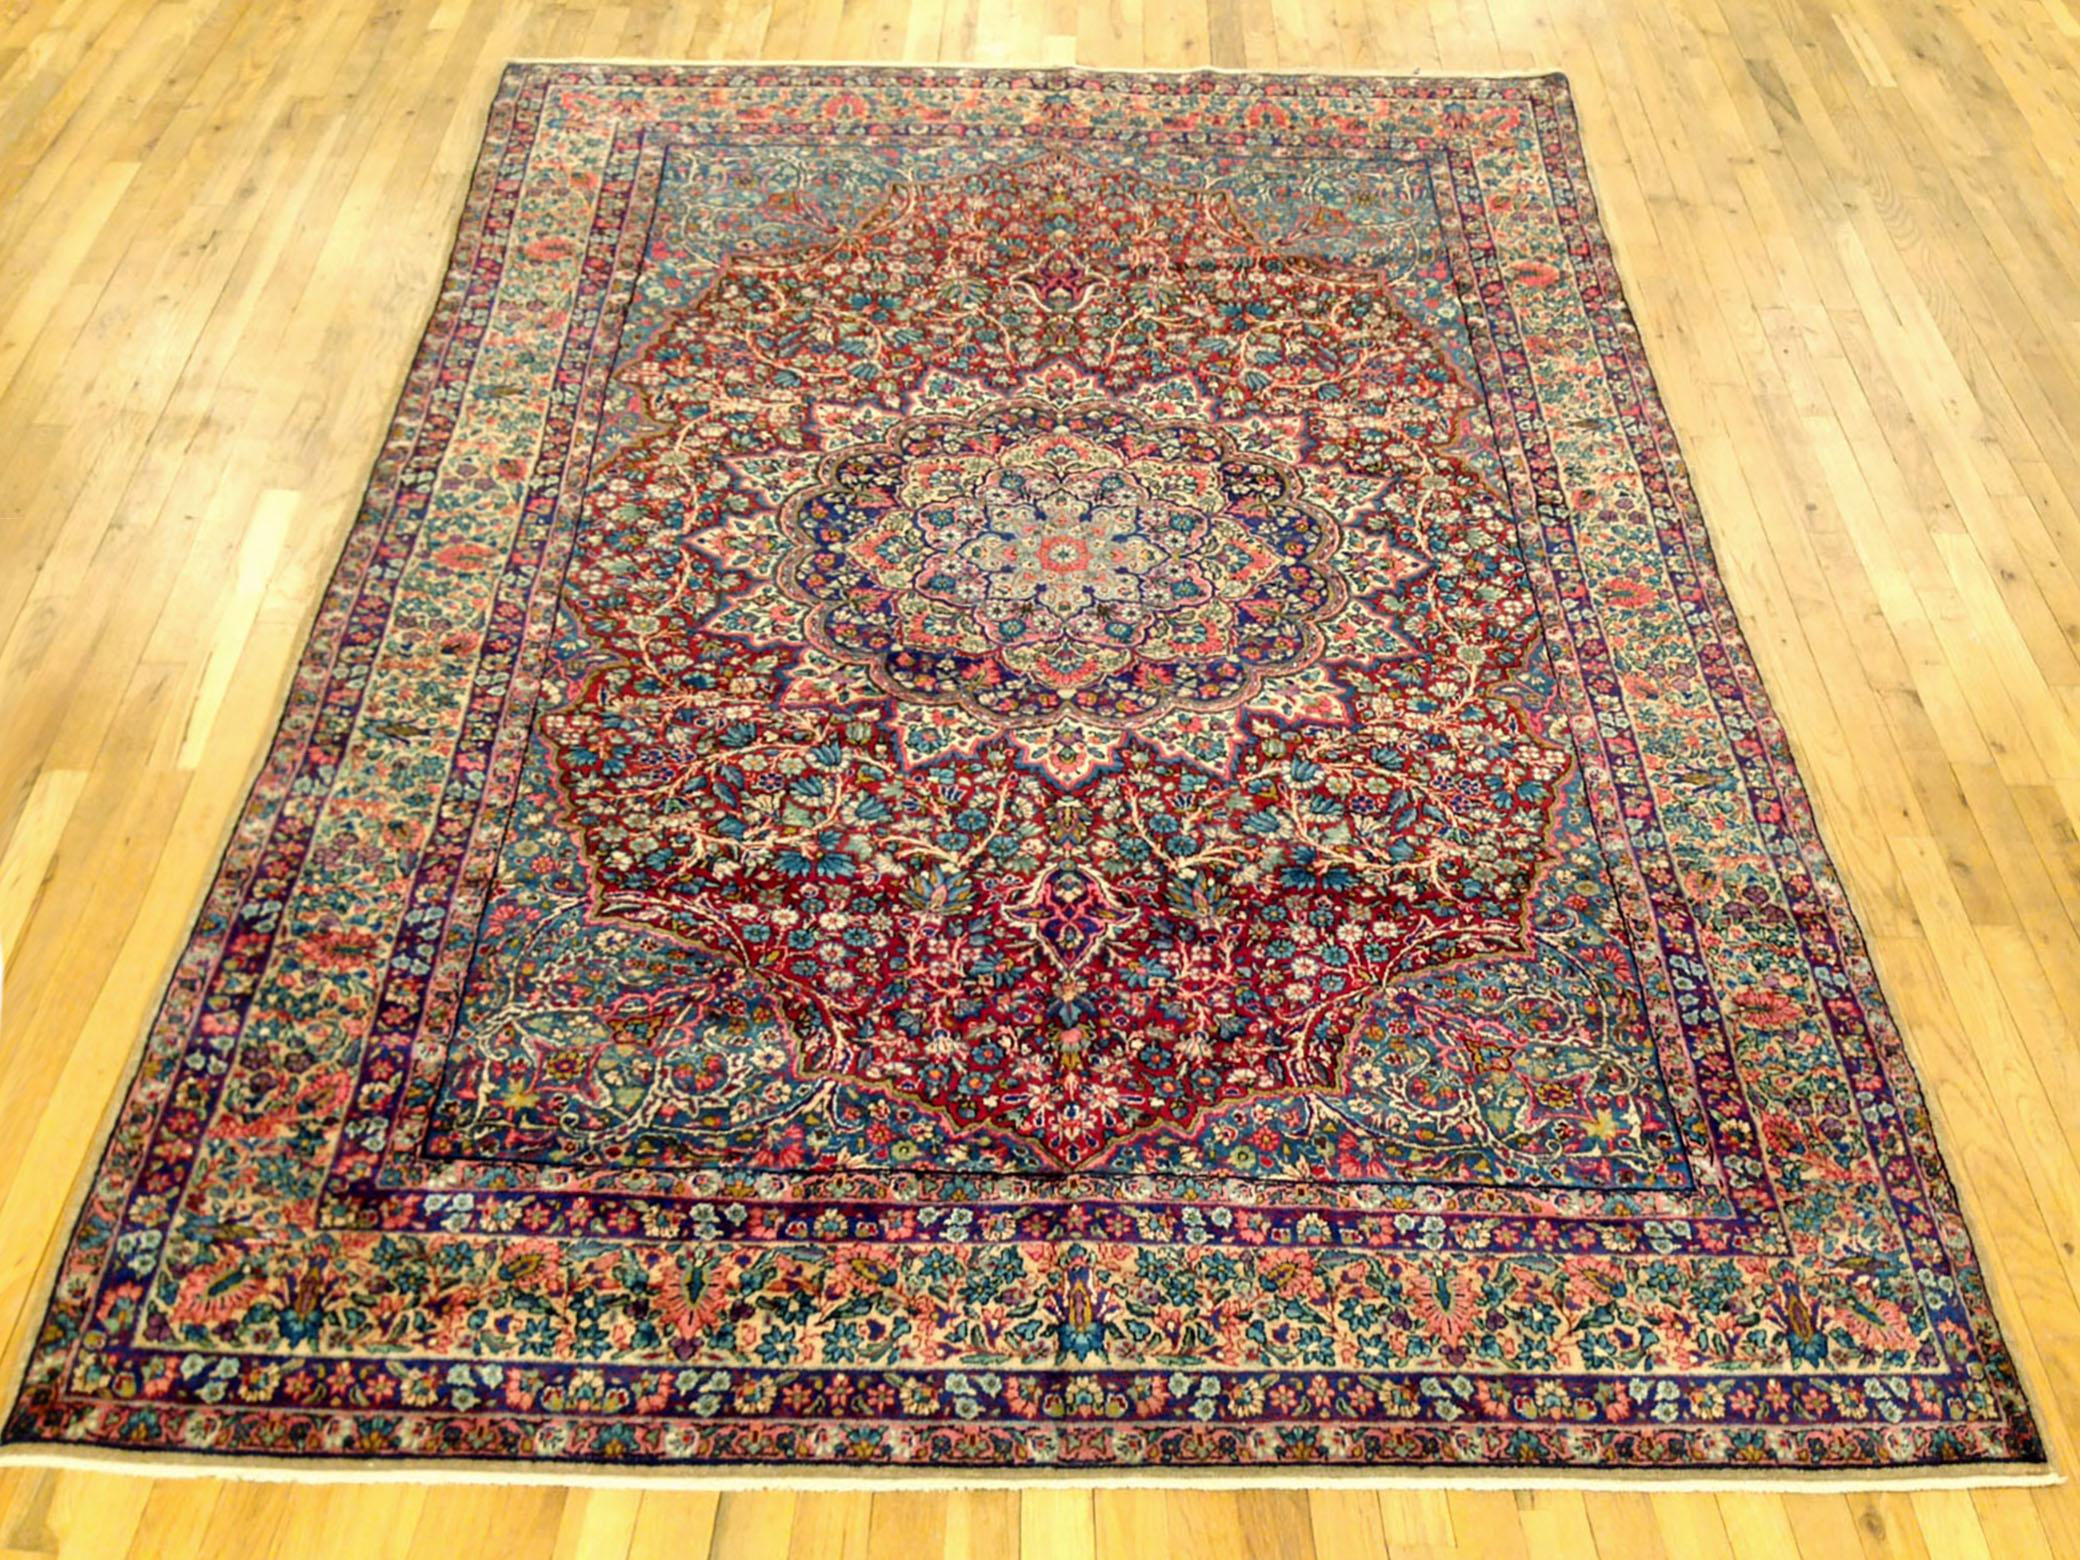 Antique Persian Kerman oriental carpet, size 8'9